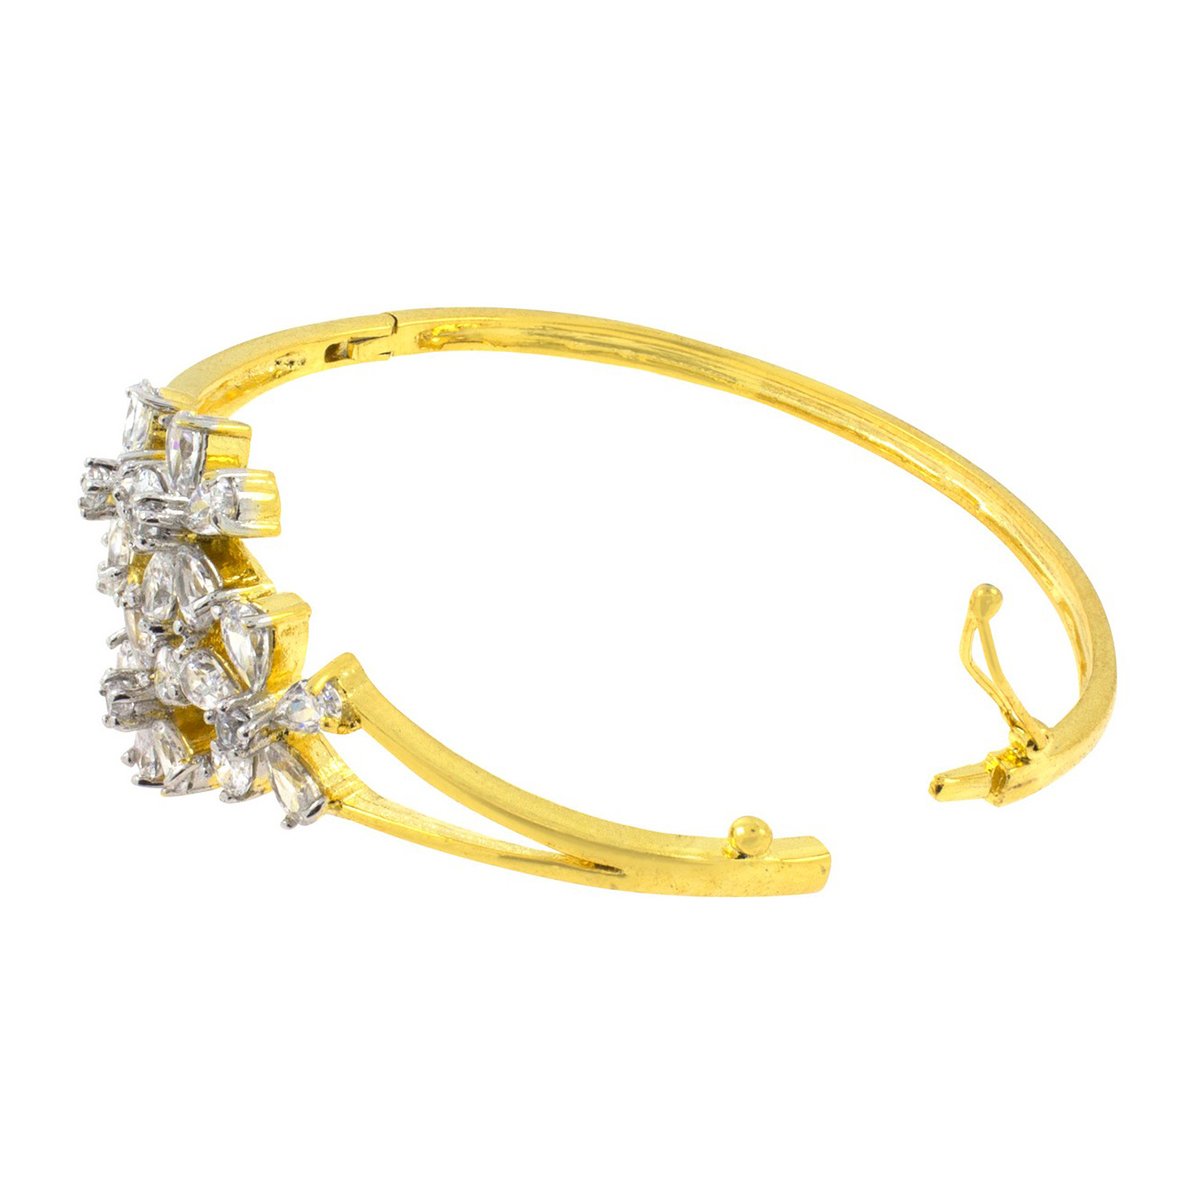 Openable Flower Marquise American Diamond Gold Bangle Bracelet Kada